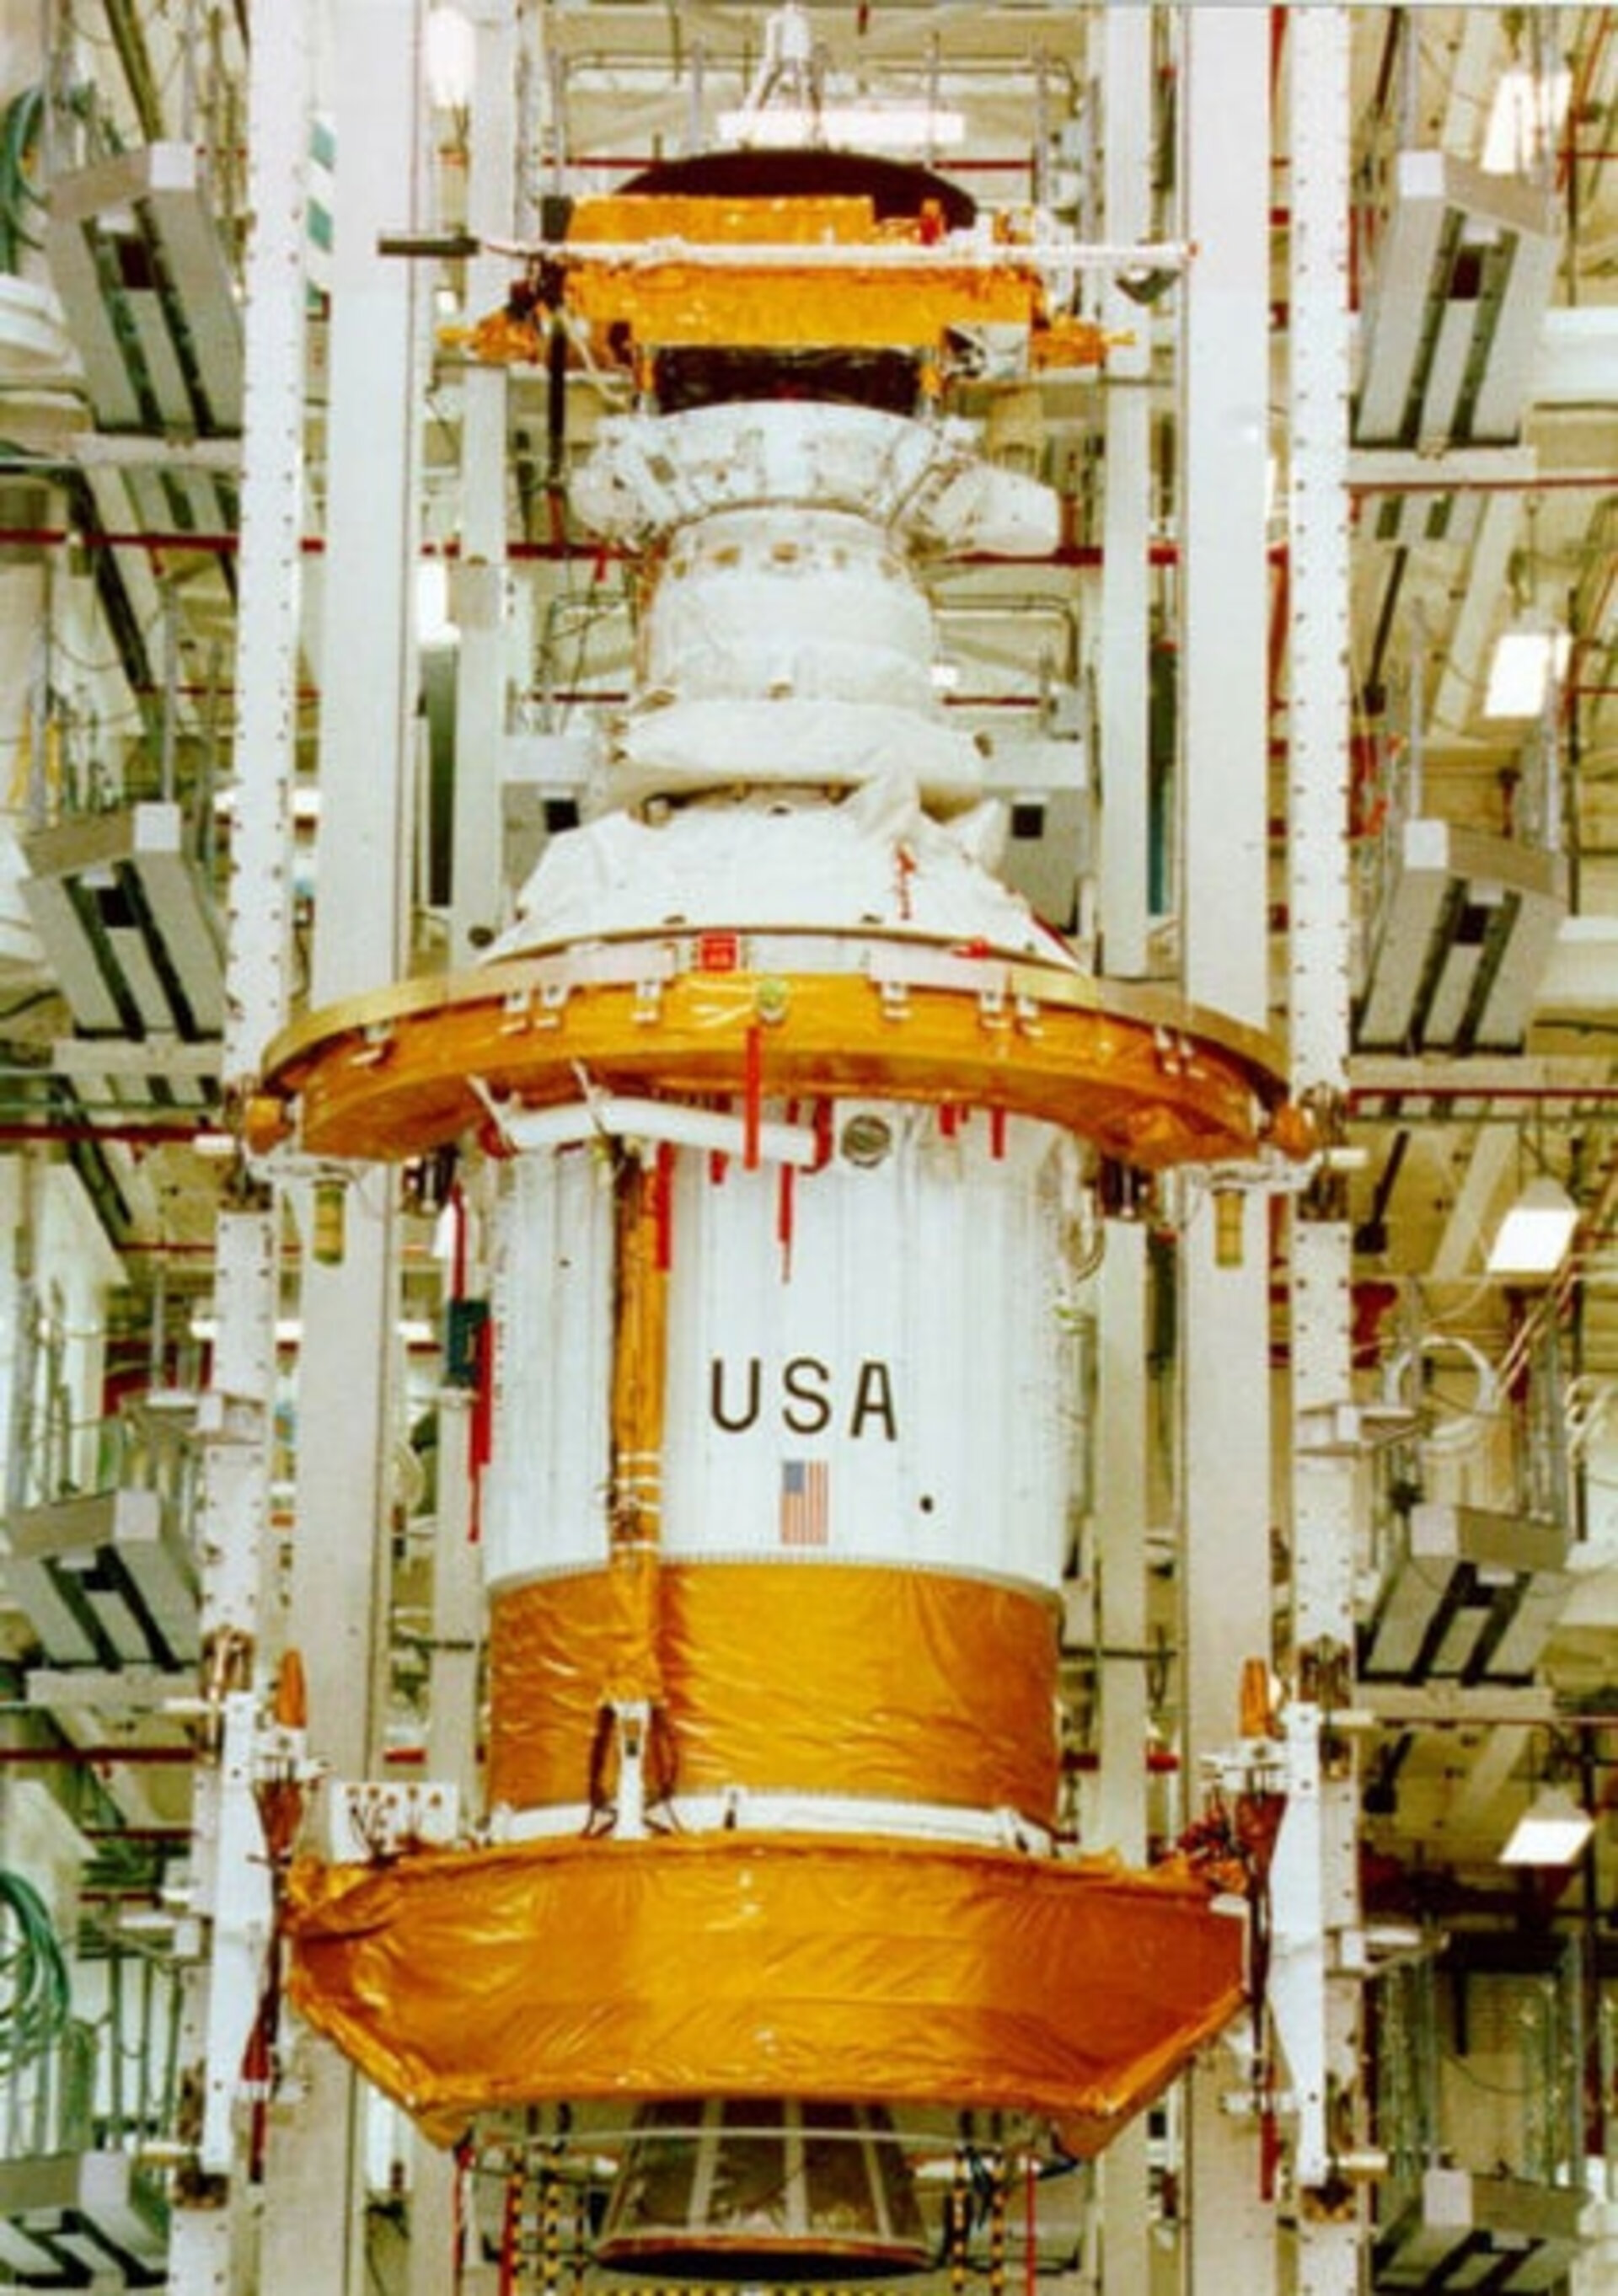 Ulysses propulsion modules